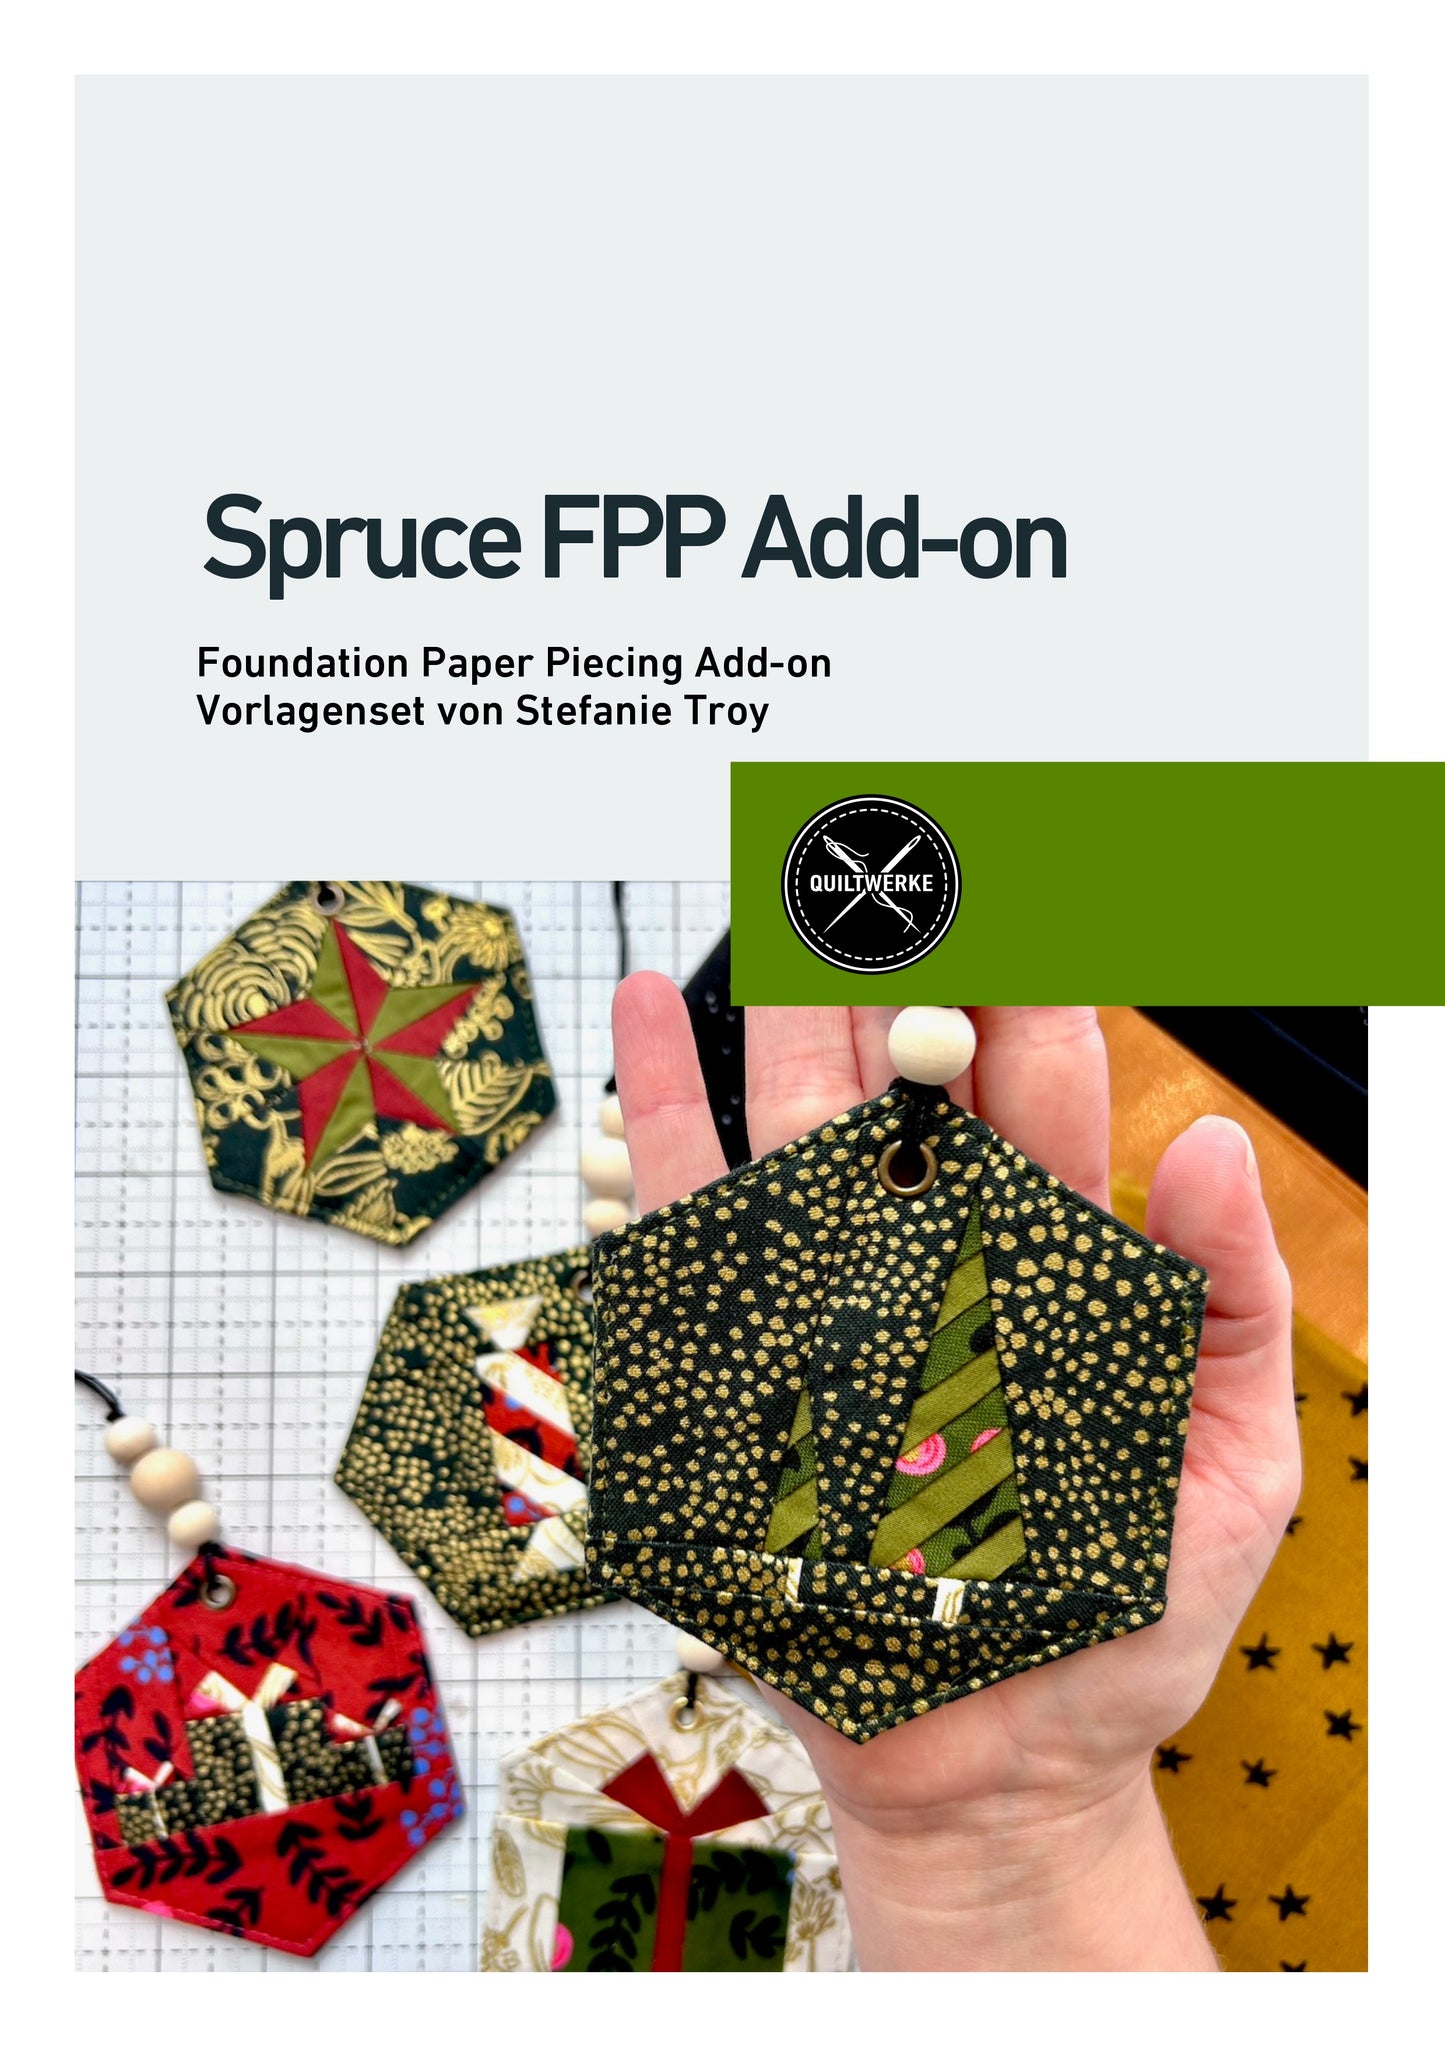 Spruce FPP Template Set